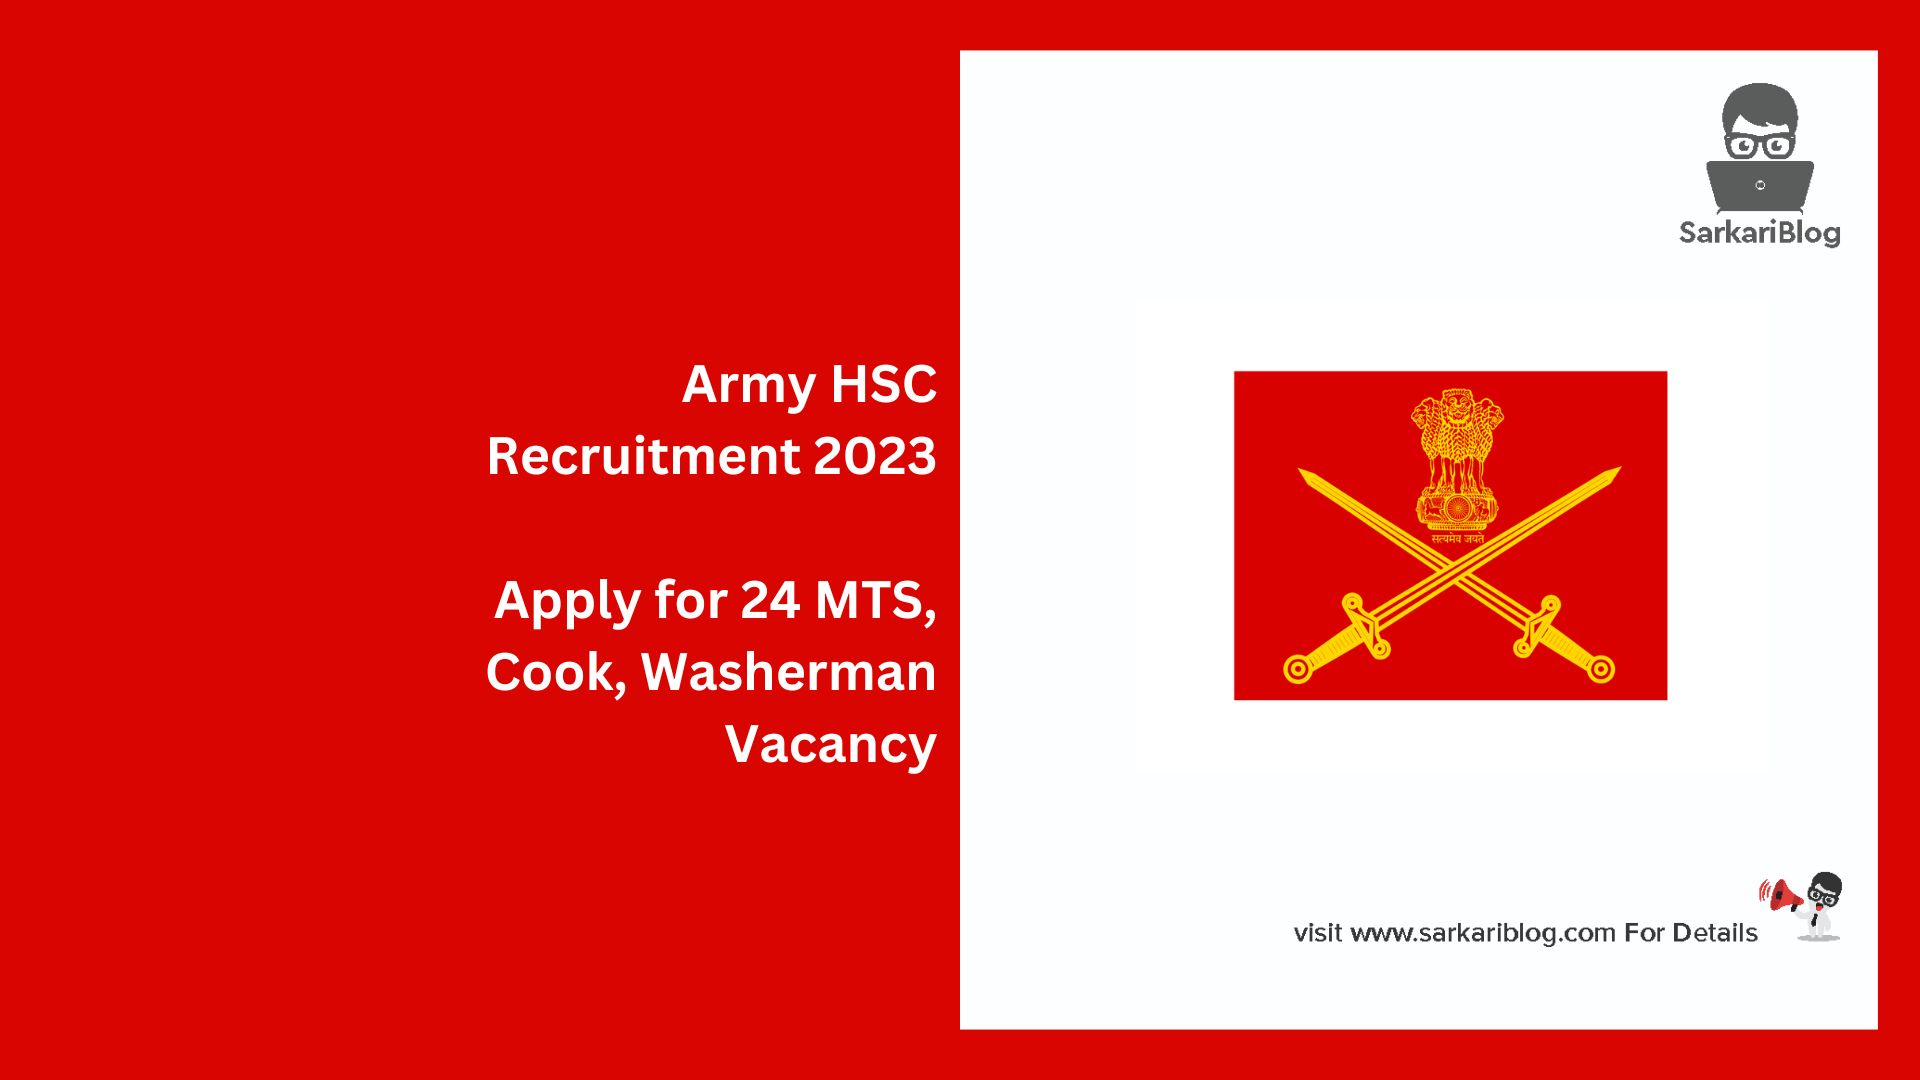 Army HSC Recruitment 2023